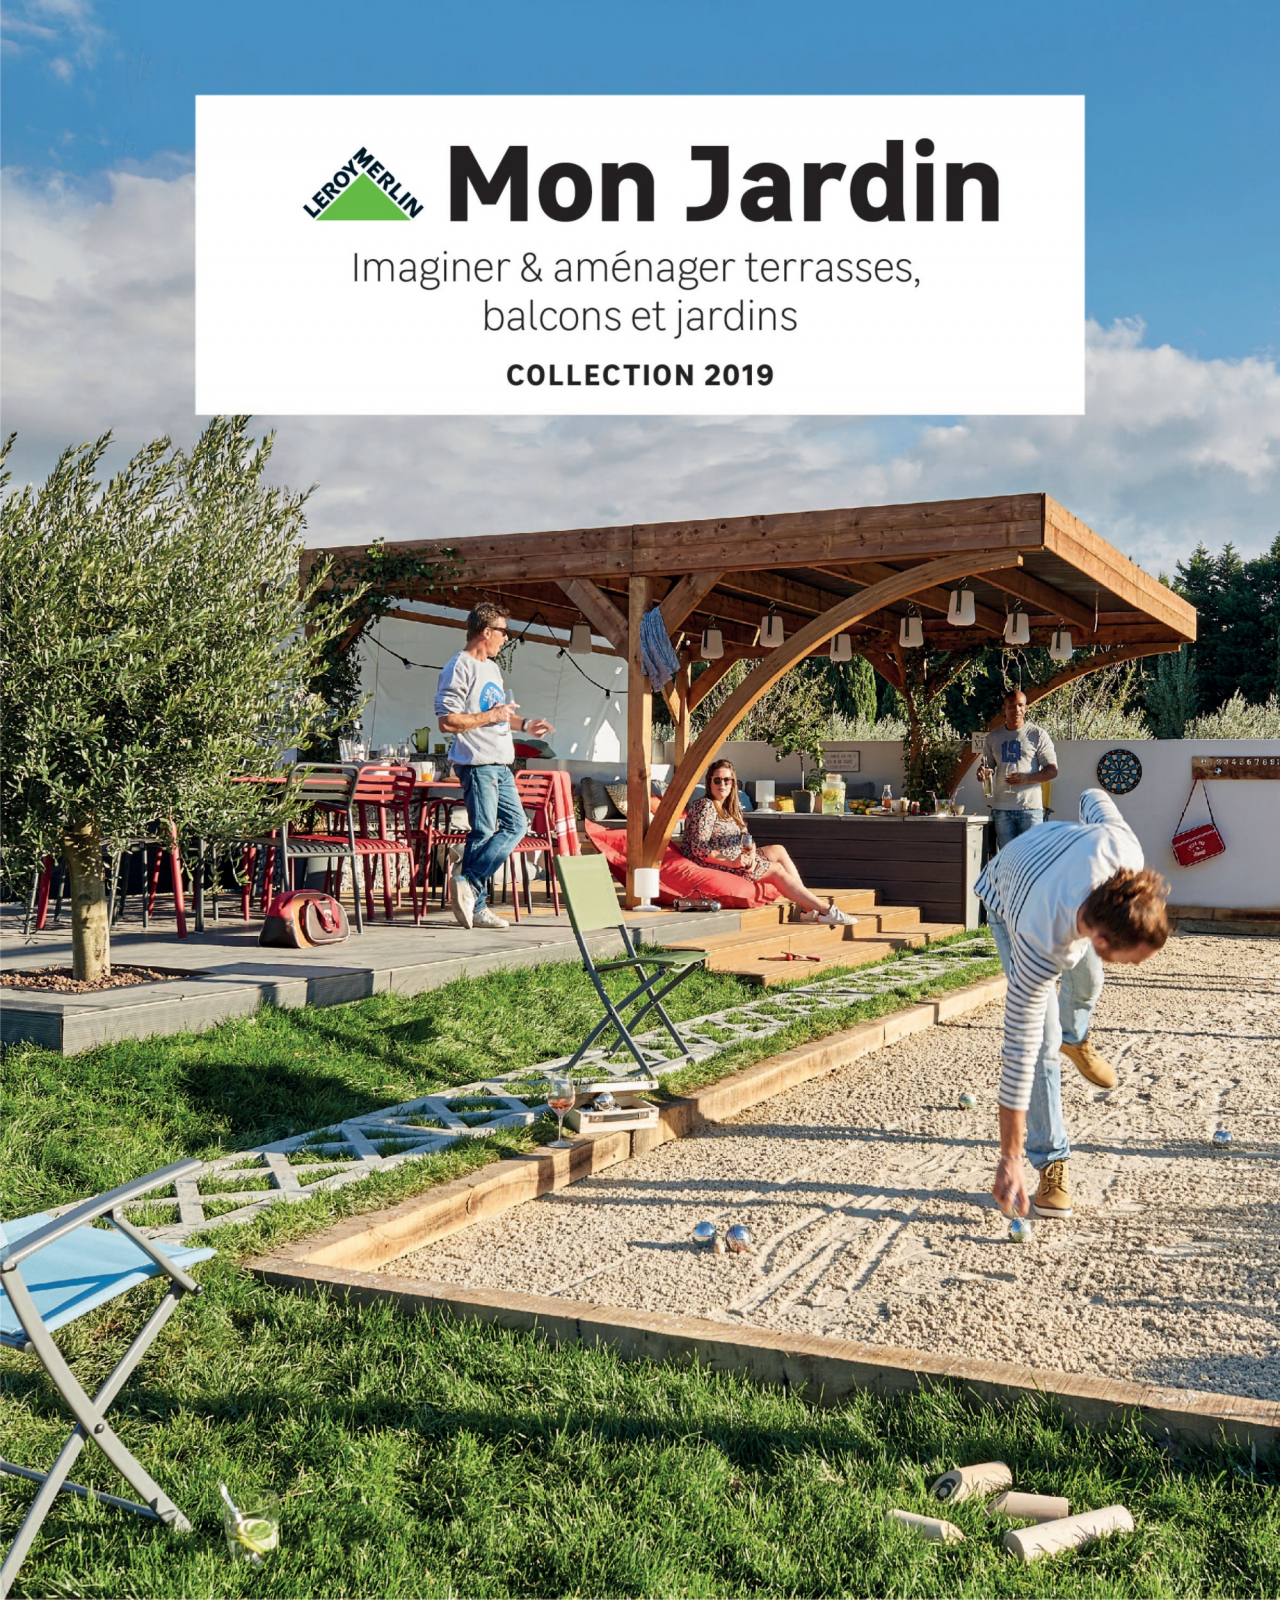 Catalogue Leroy Merlin - Mon Jardin Du 01/01/2019 | Kupino.fr intérieur Leroy Merlin Catalogue Jardin